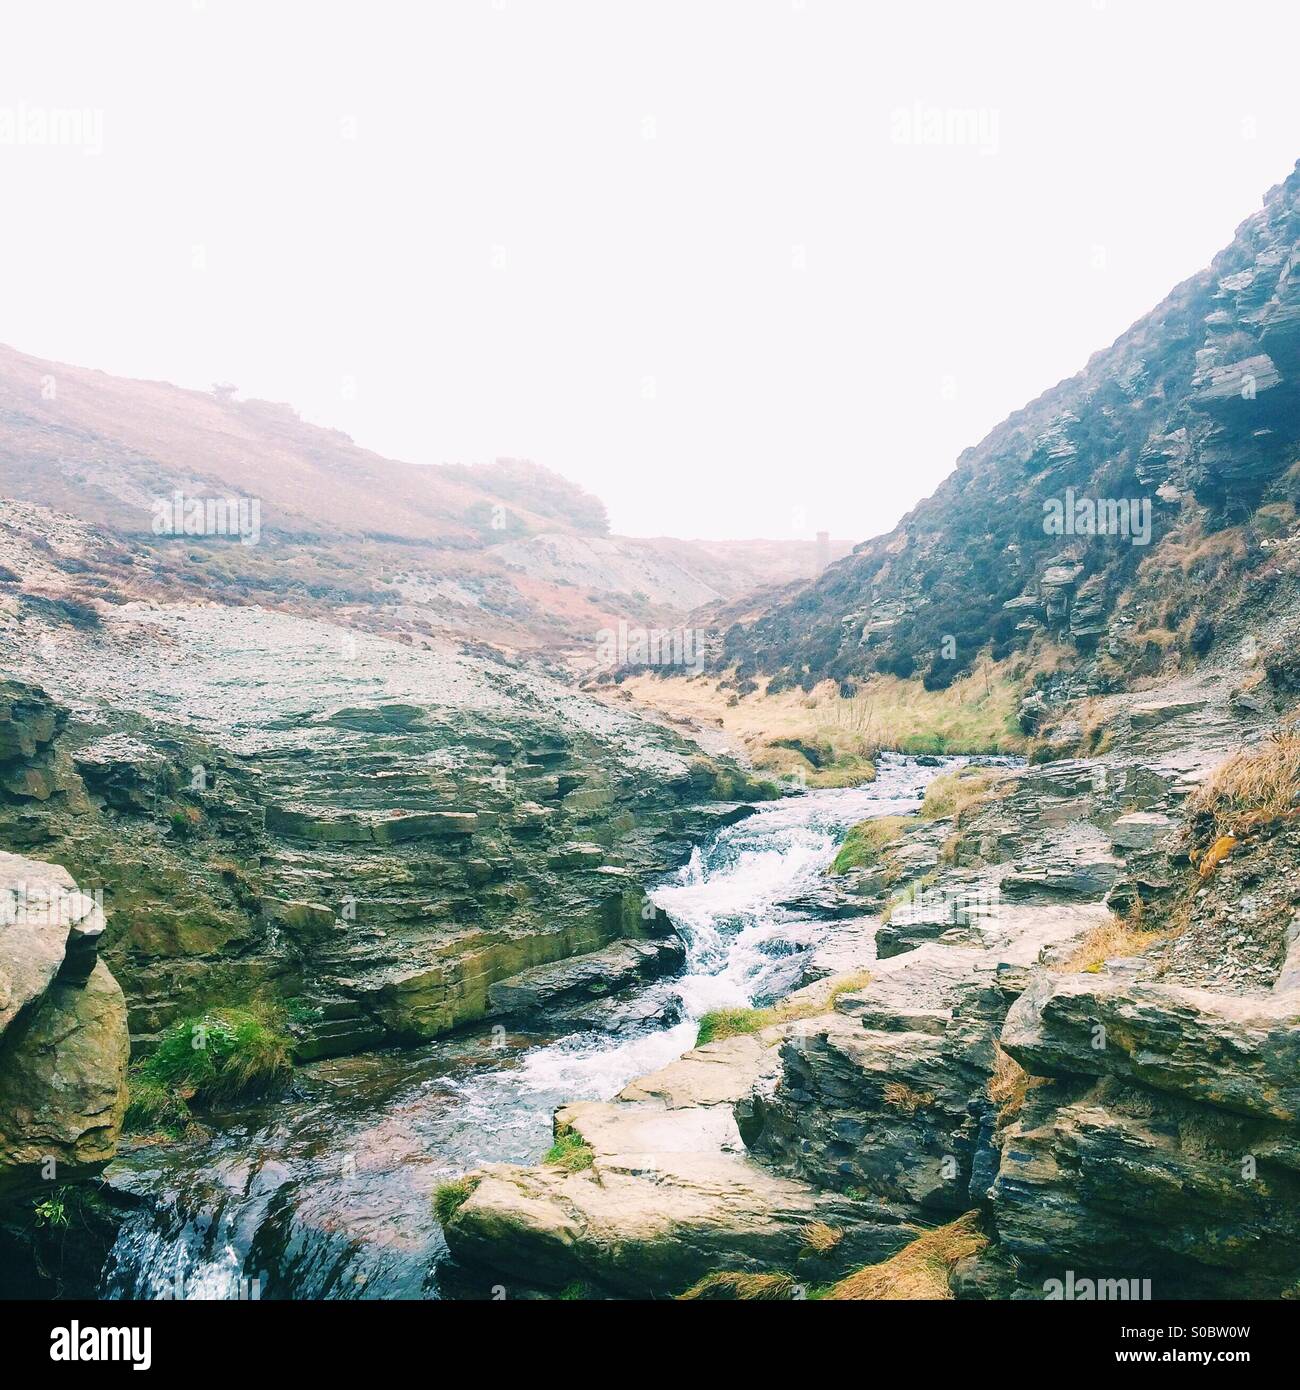 Stream flowing through rocky landscape. Stock Photo